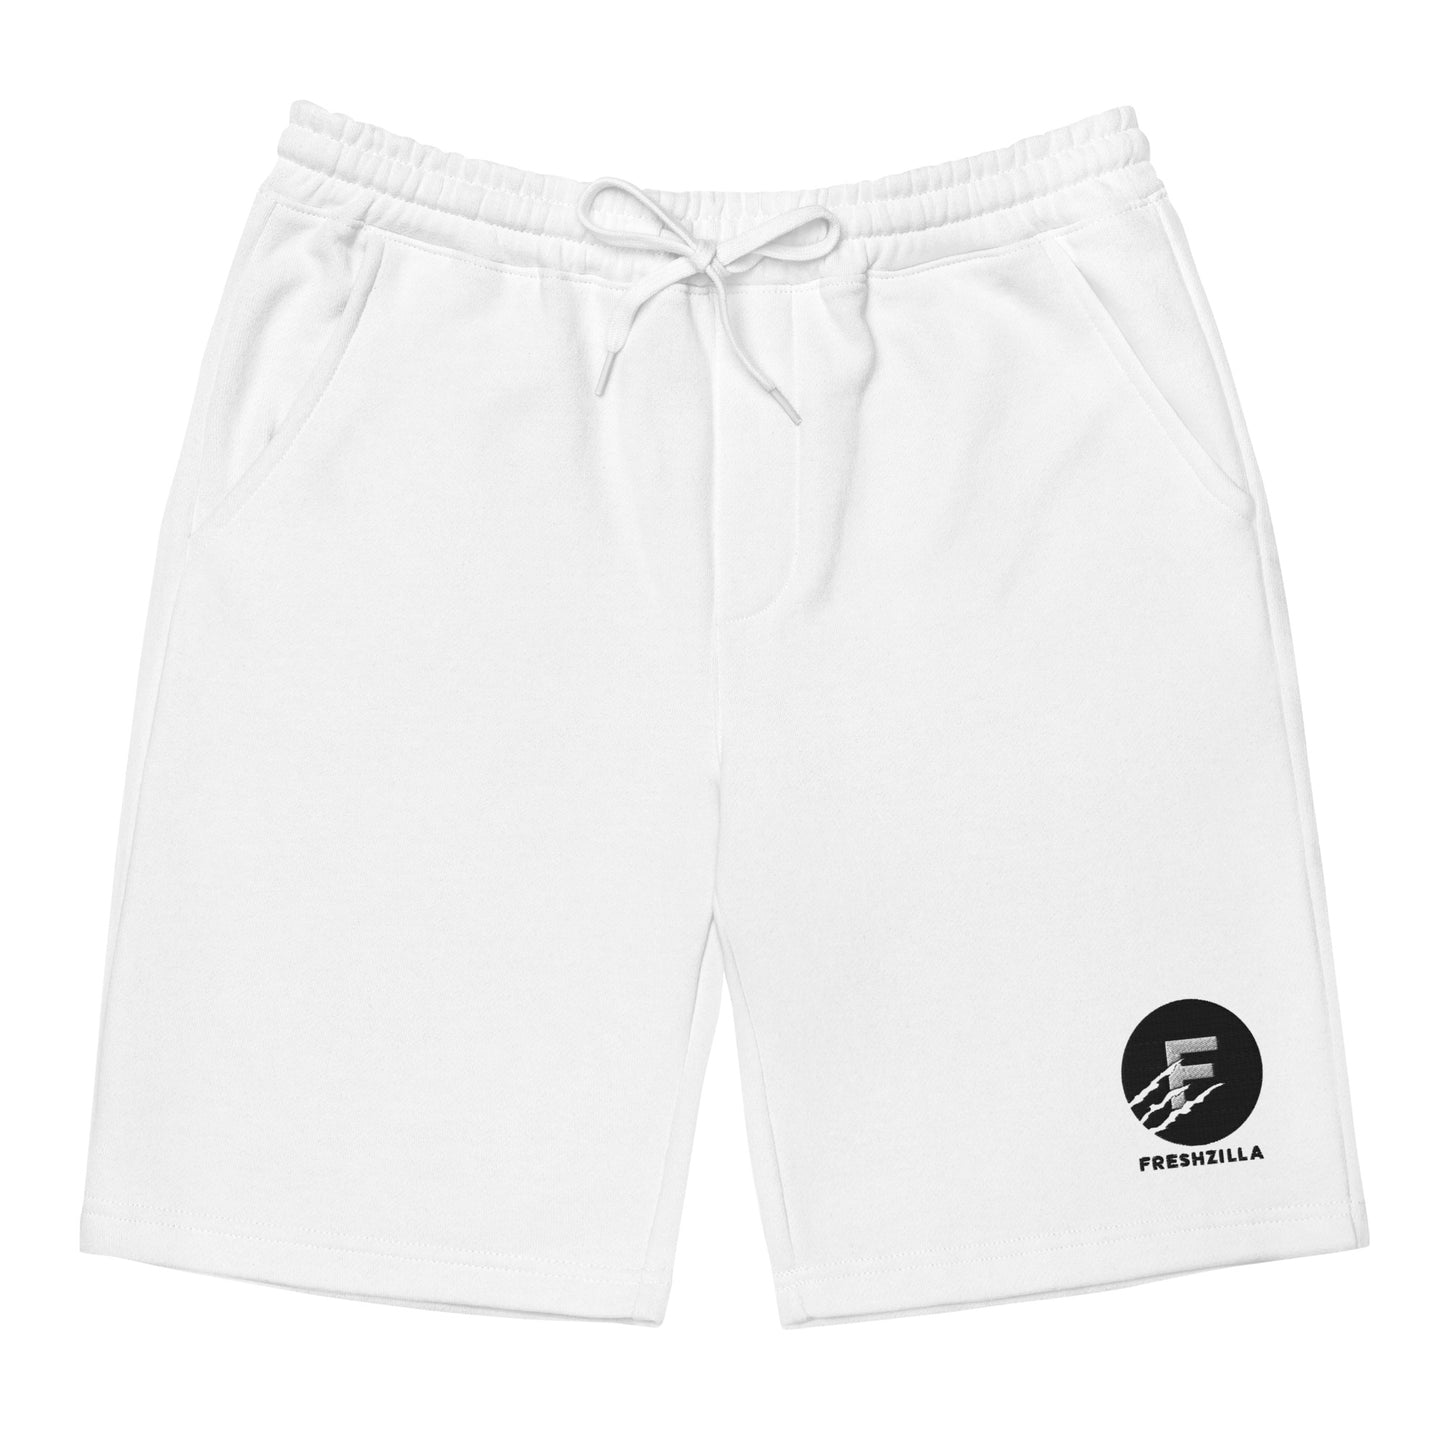 FRESHZILLA© fleece shorts White